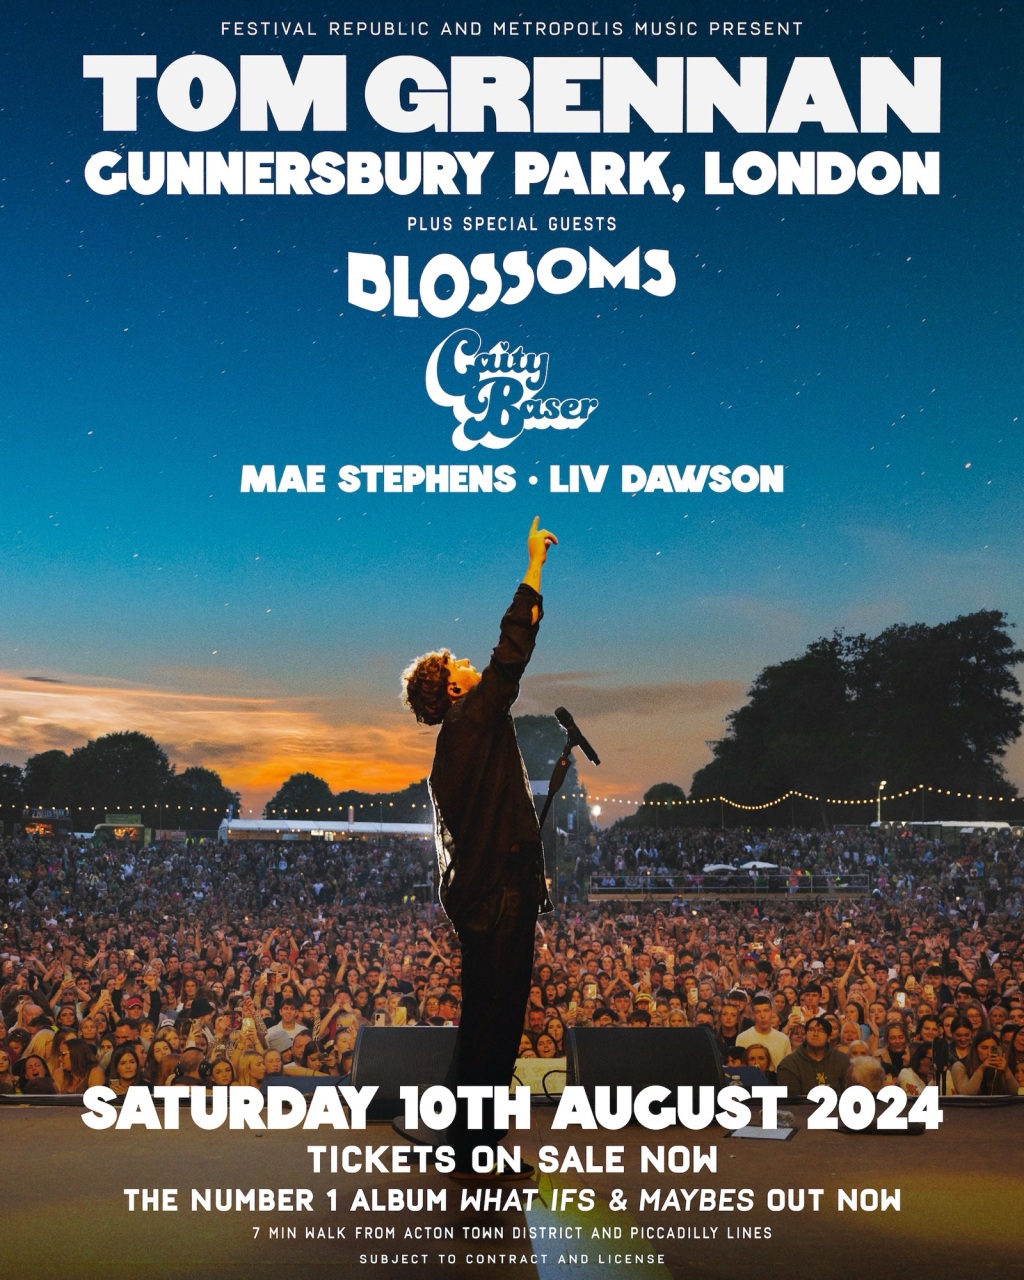 Tom Grennan to headline London’s Gunnersbury Park this summer with A* lineup